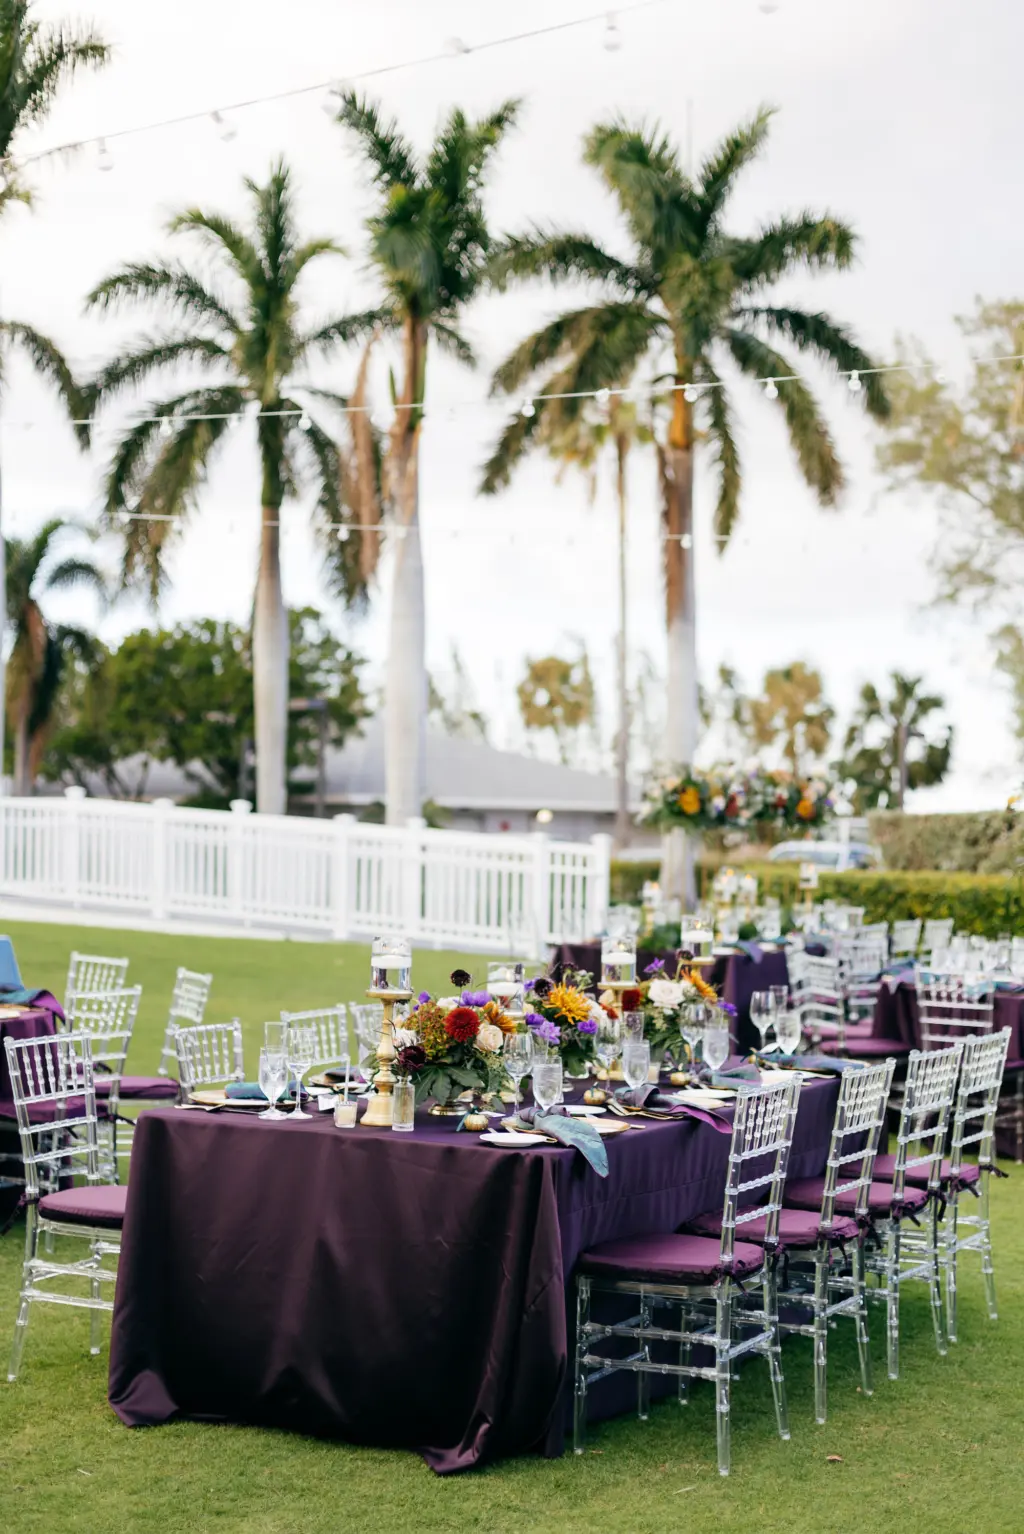 Jewel-Toned Moody Fall Wedding Reception Table Decor Ideas | Ghost Chiavari Chairs with Eggplant Dark Purple Feasting Table Linen Inspiration | Sarasota Event Venue The Resort at Longboat Key Club